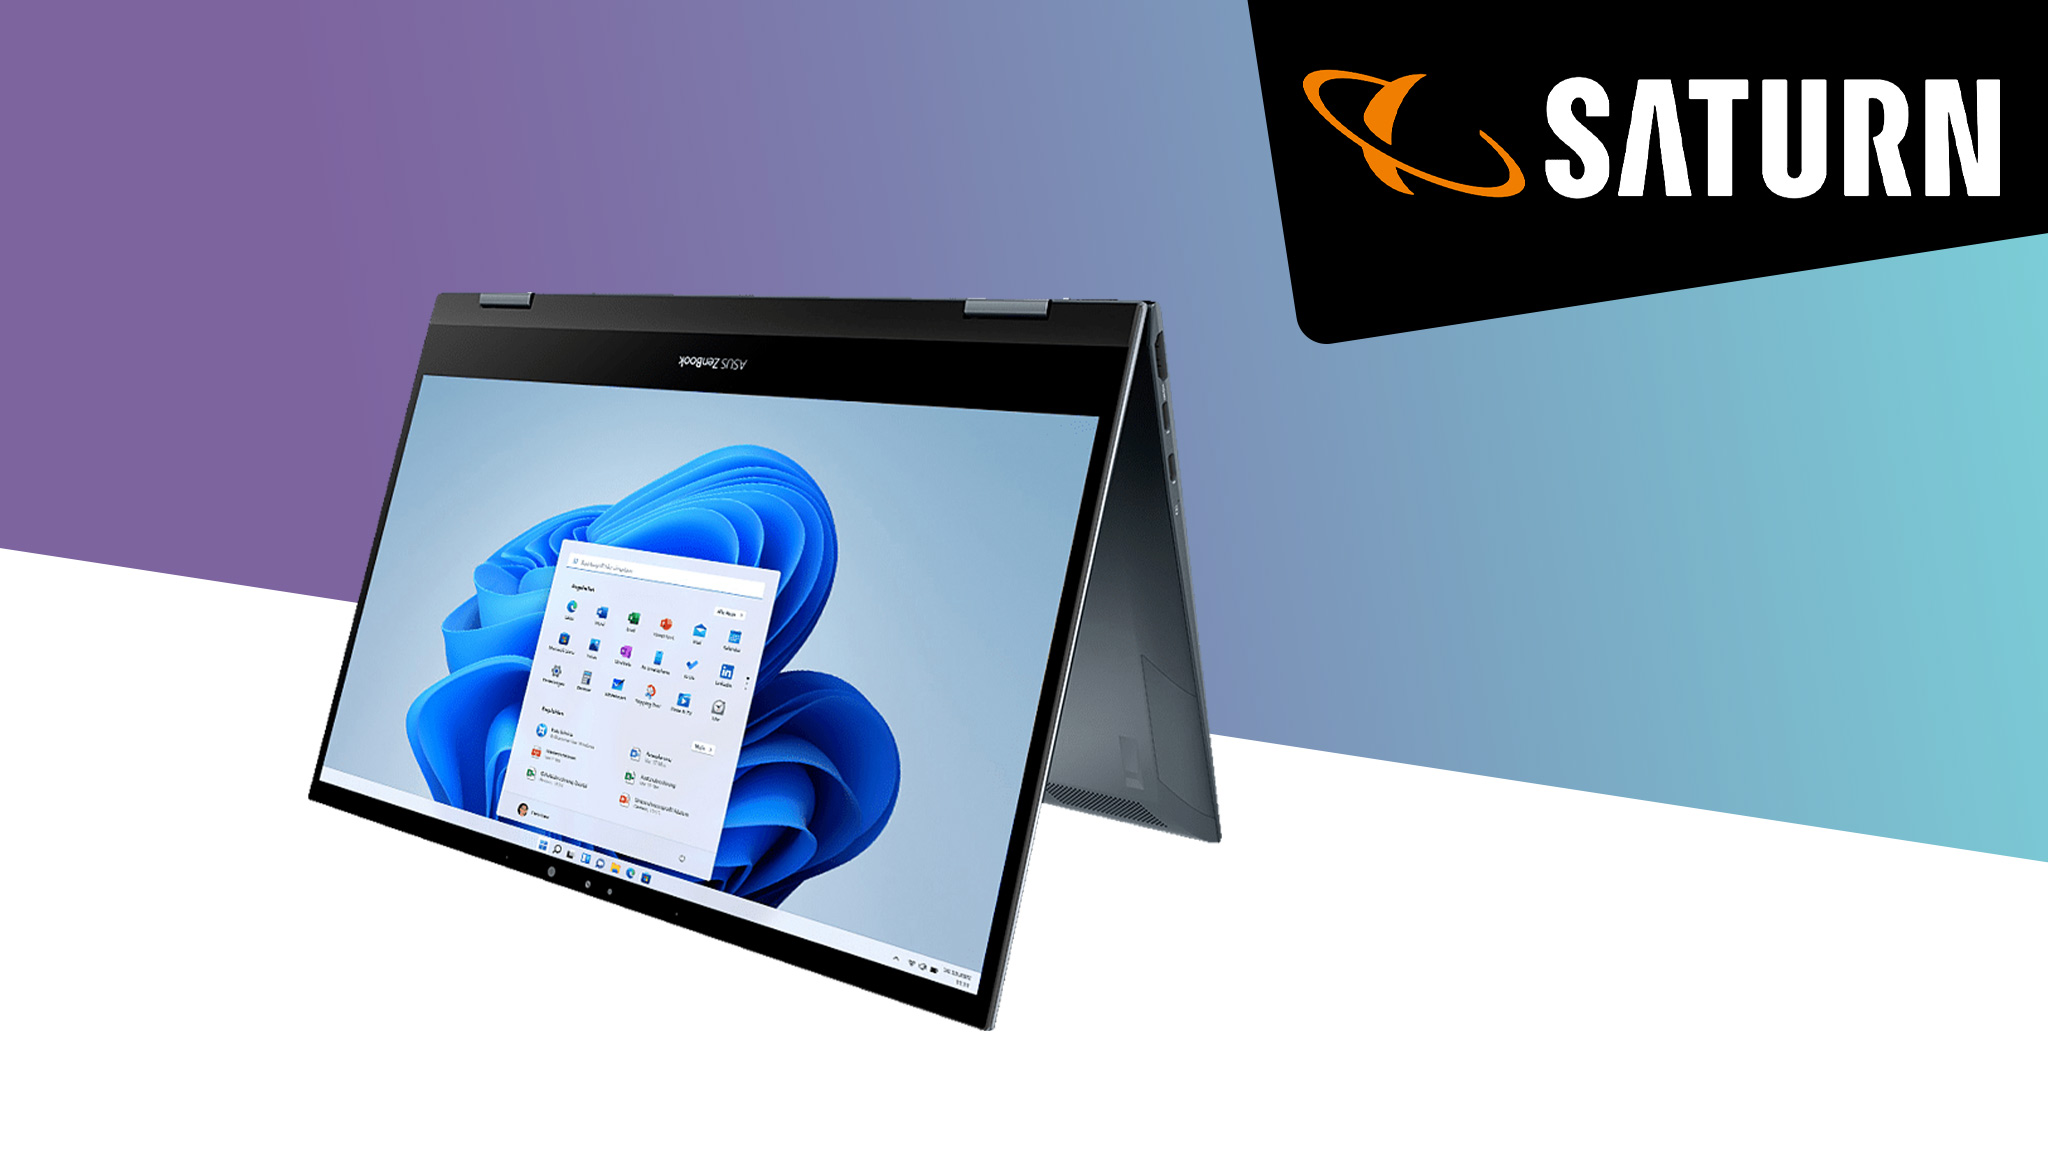 Asus ZenBook Flip 13 UX363: Satte 200 Euro günstiger im Saturn-Angebot